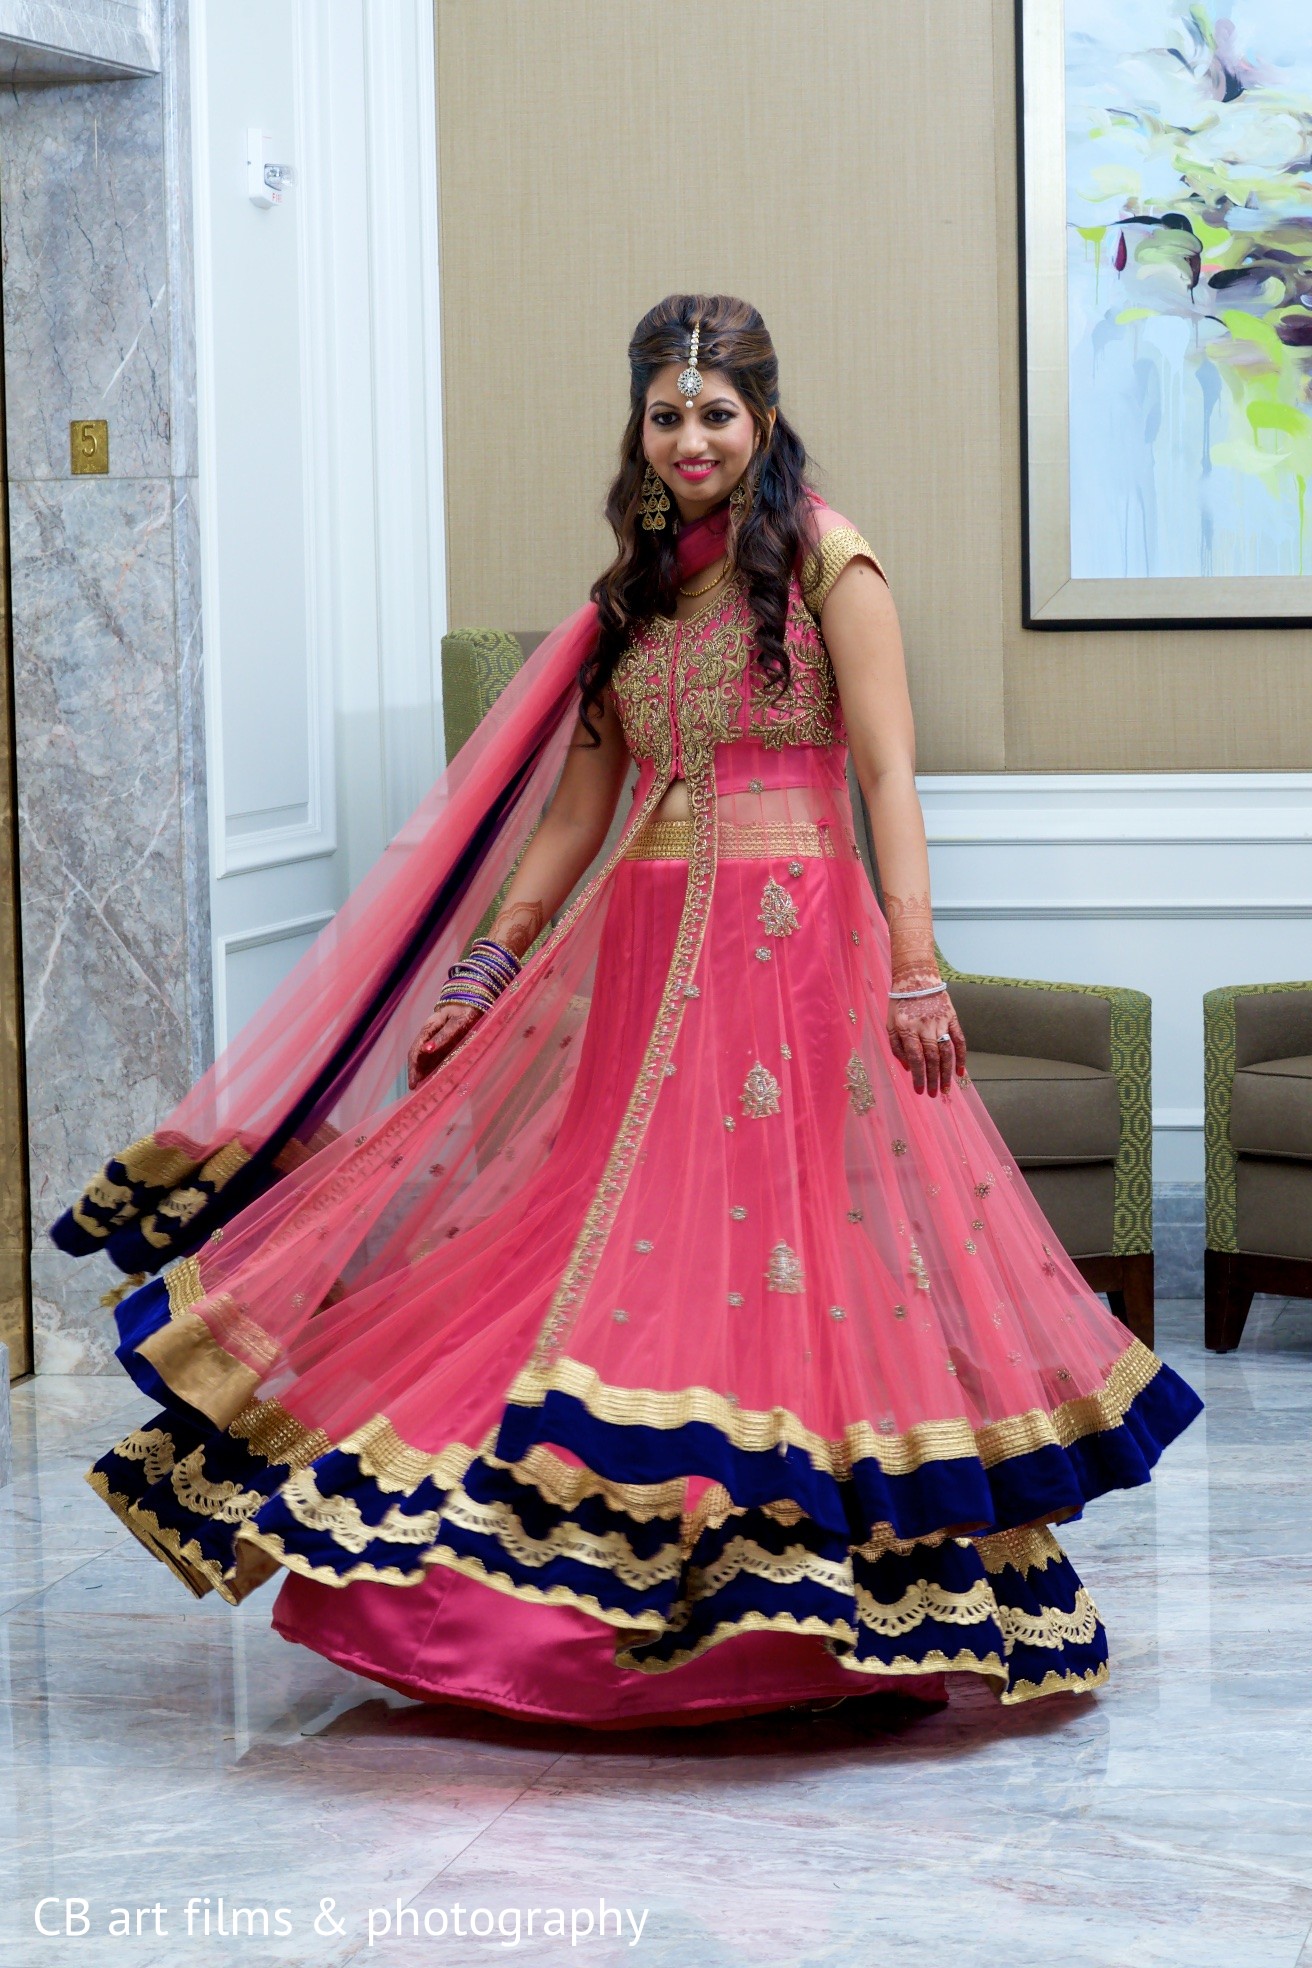 Musical Night Indian Wedding Function Musical Stock Photo 1873388020 |  Shutterstock